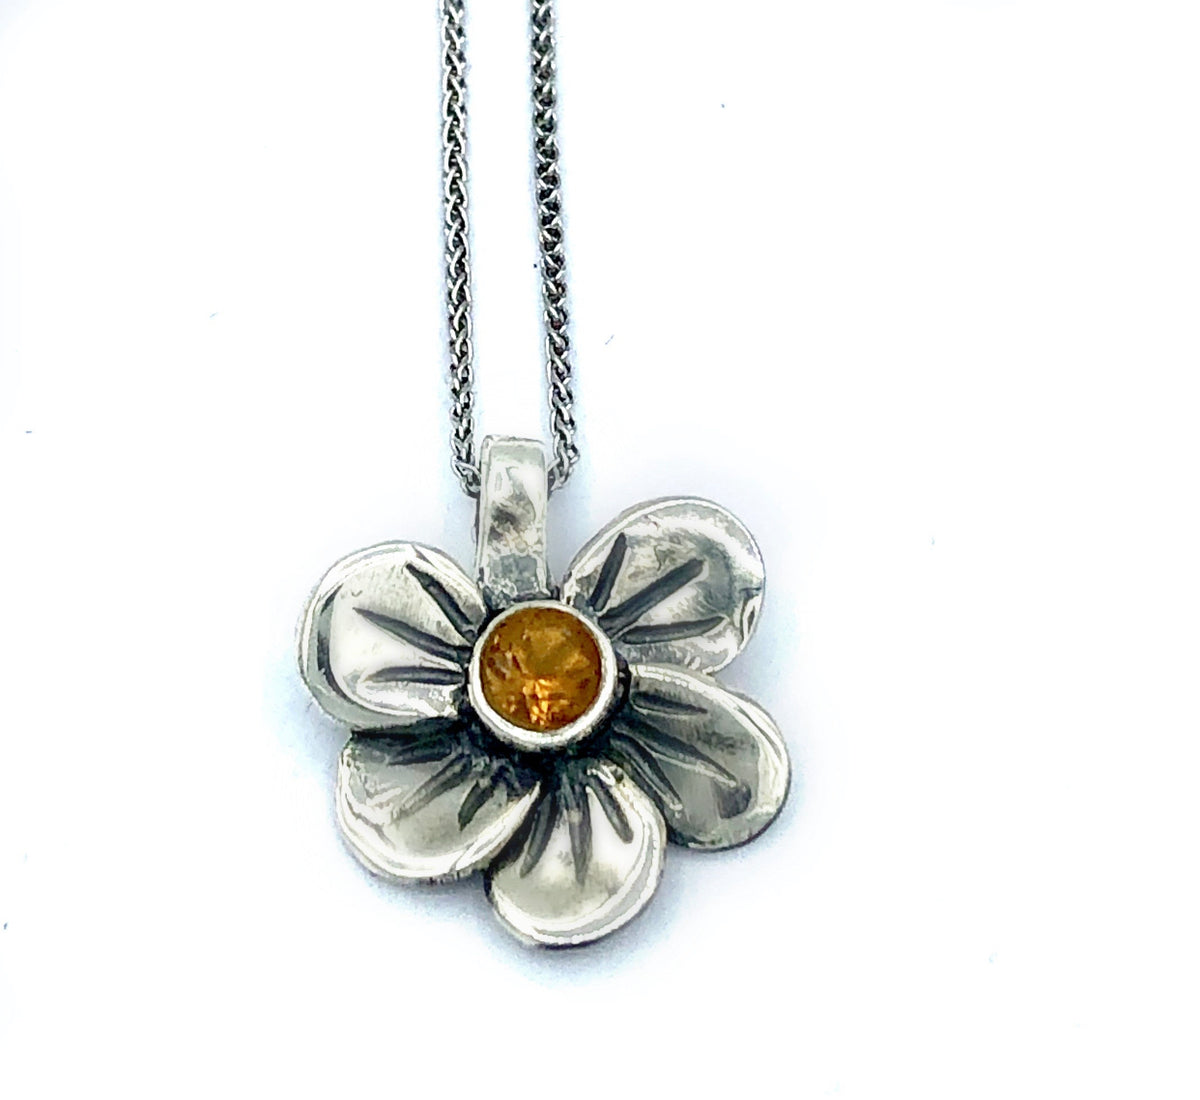 flower pendant silver with citrine gemstone